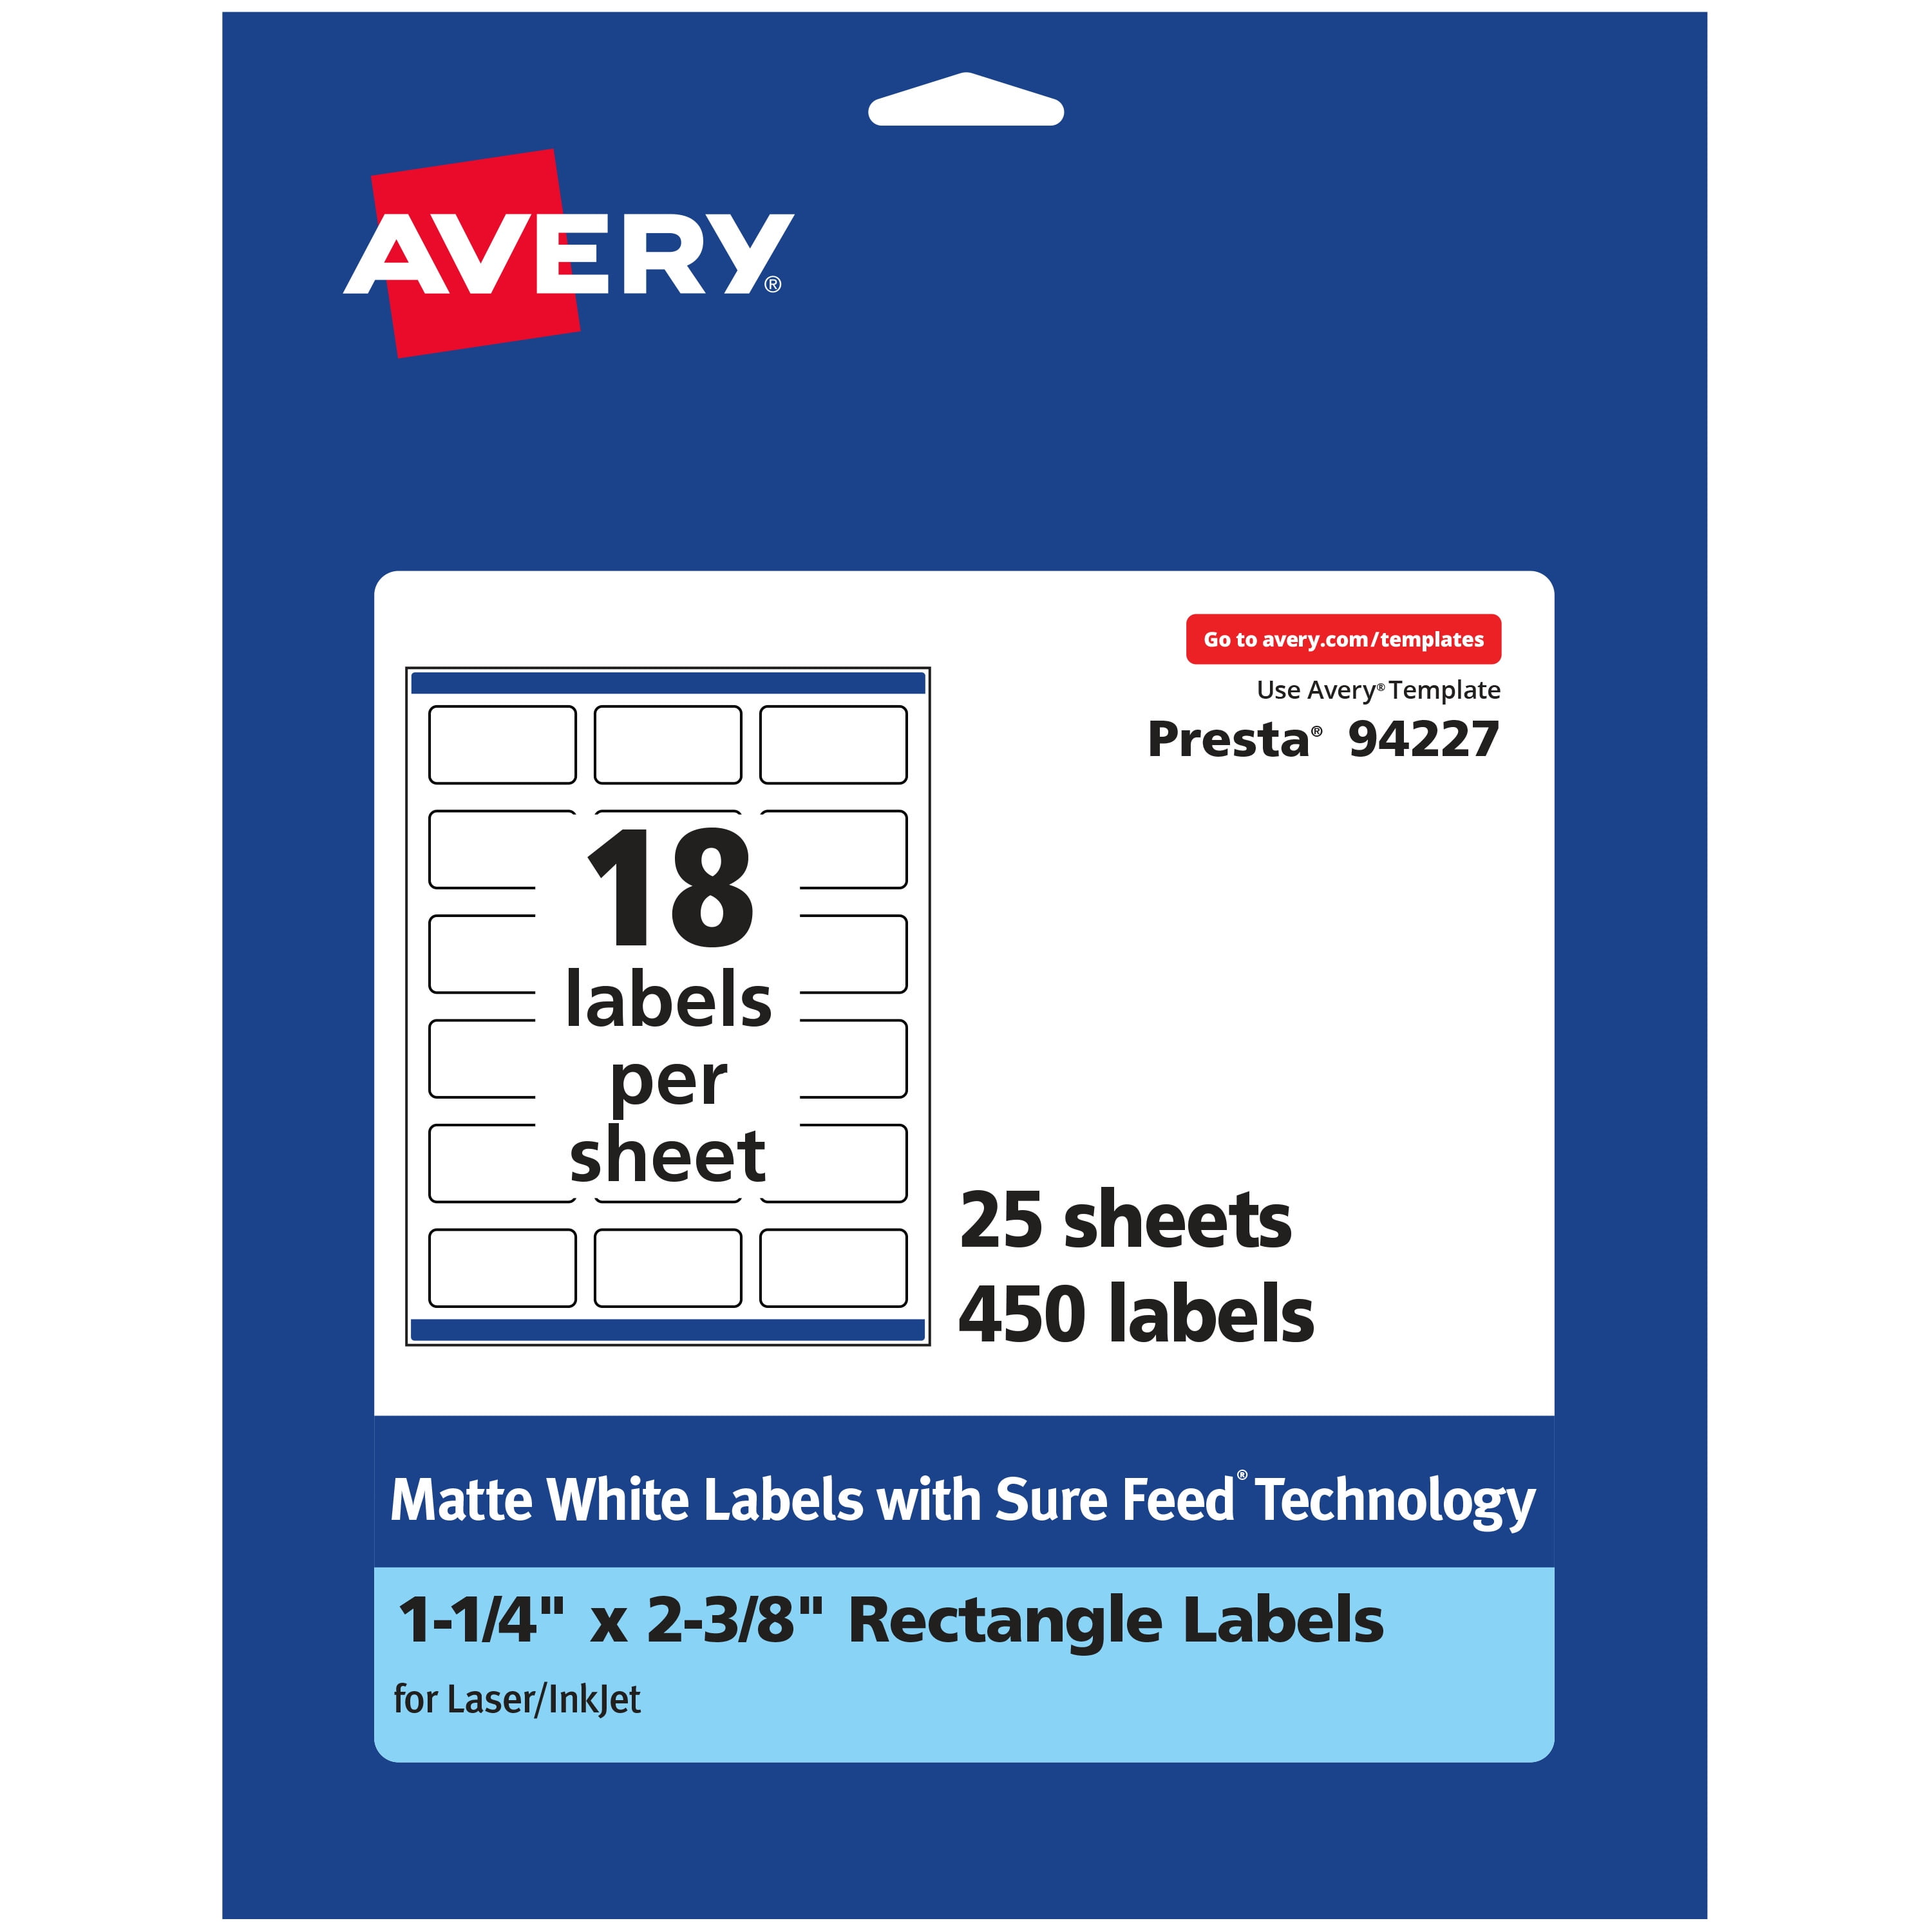 avery-design-pro-5-5-template-update-amelabyte